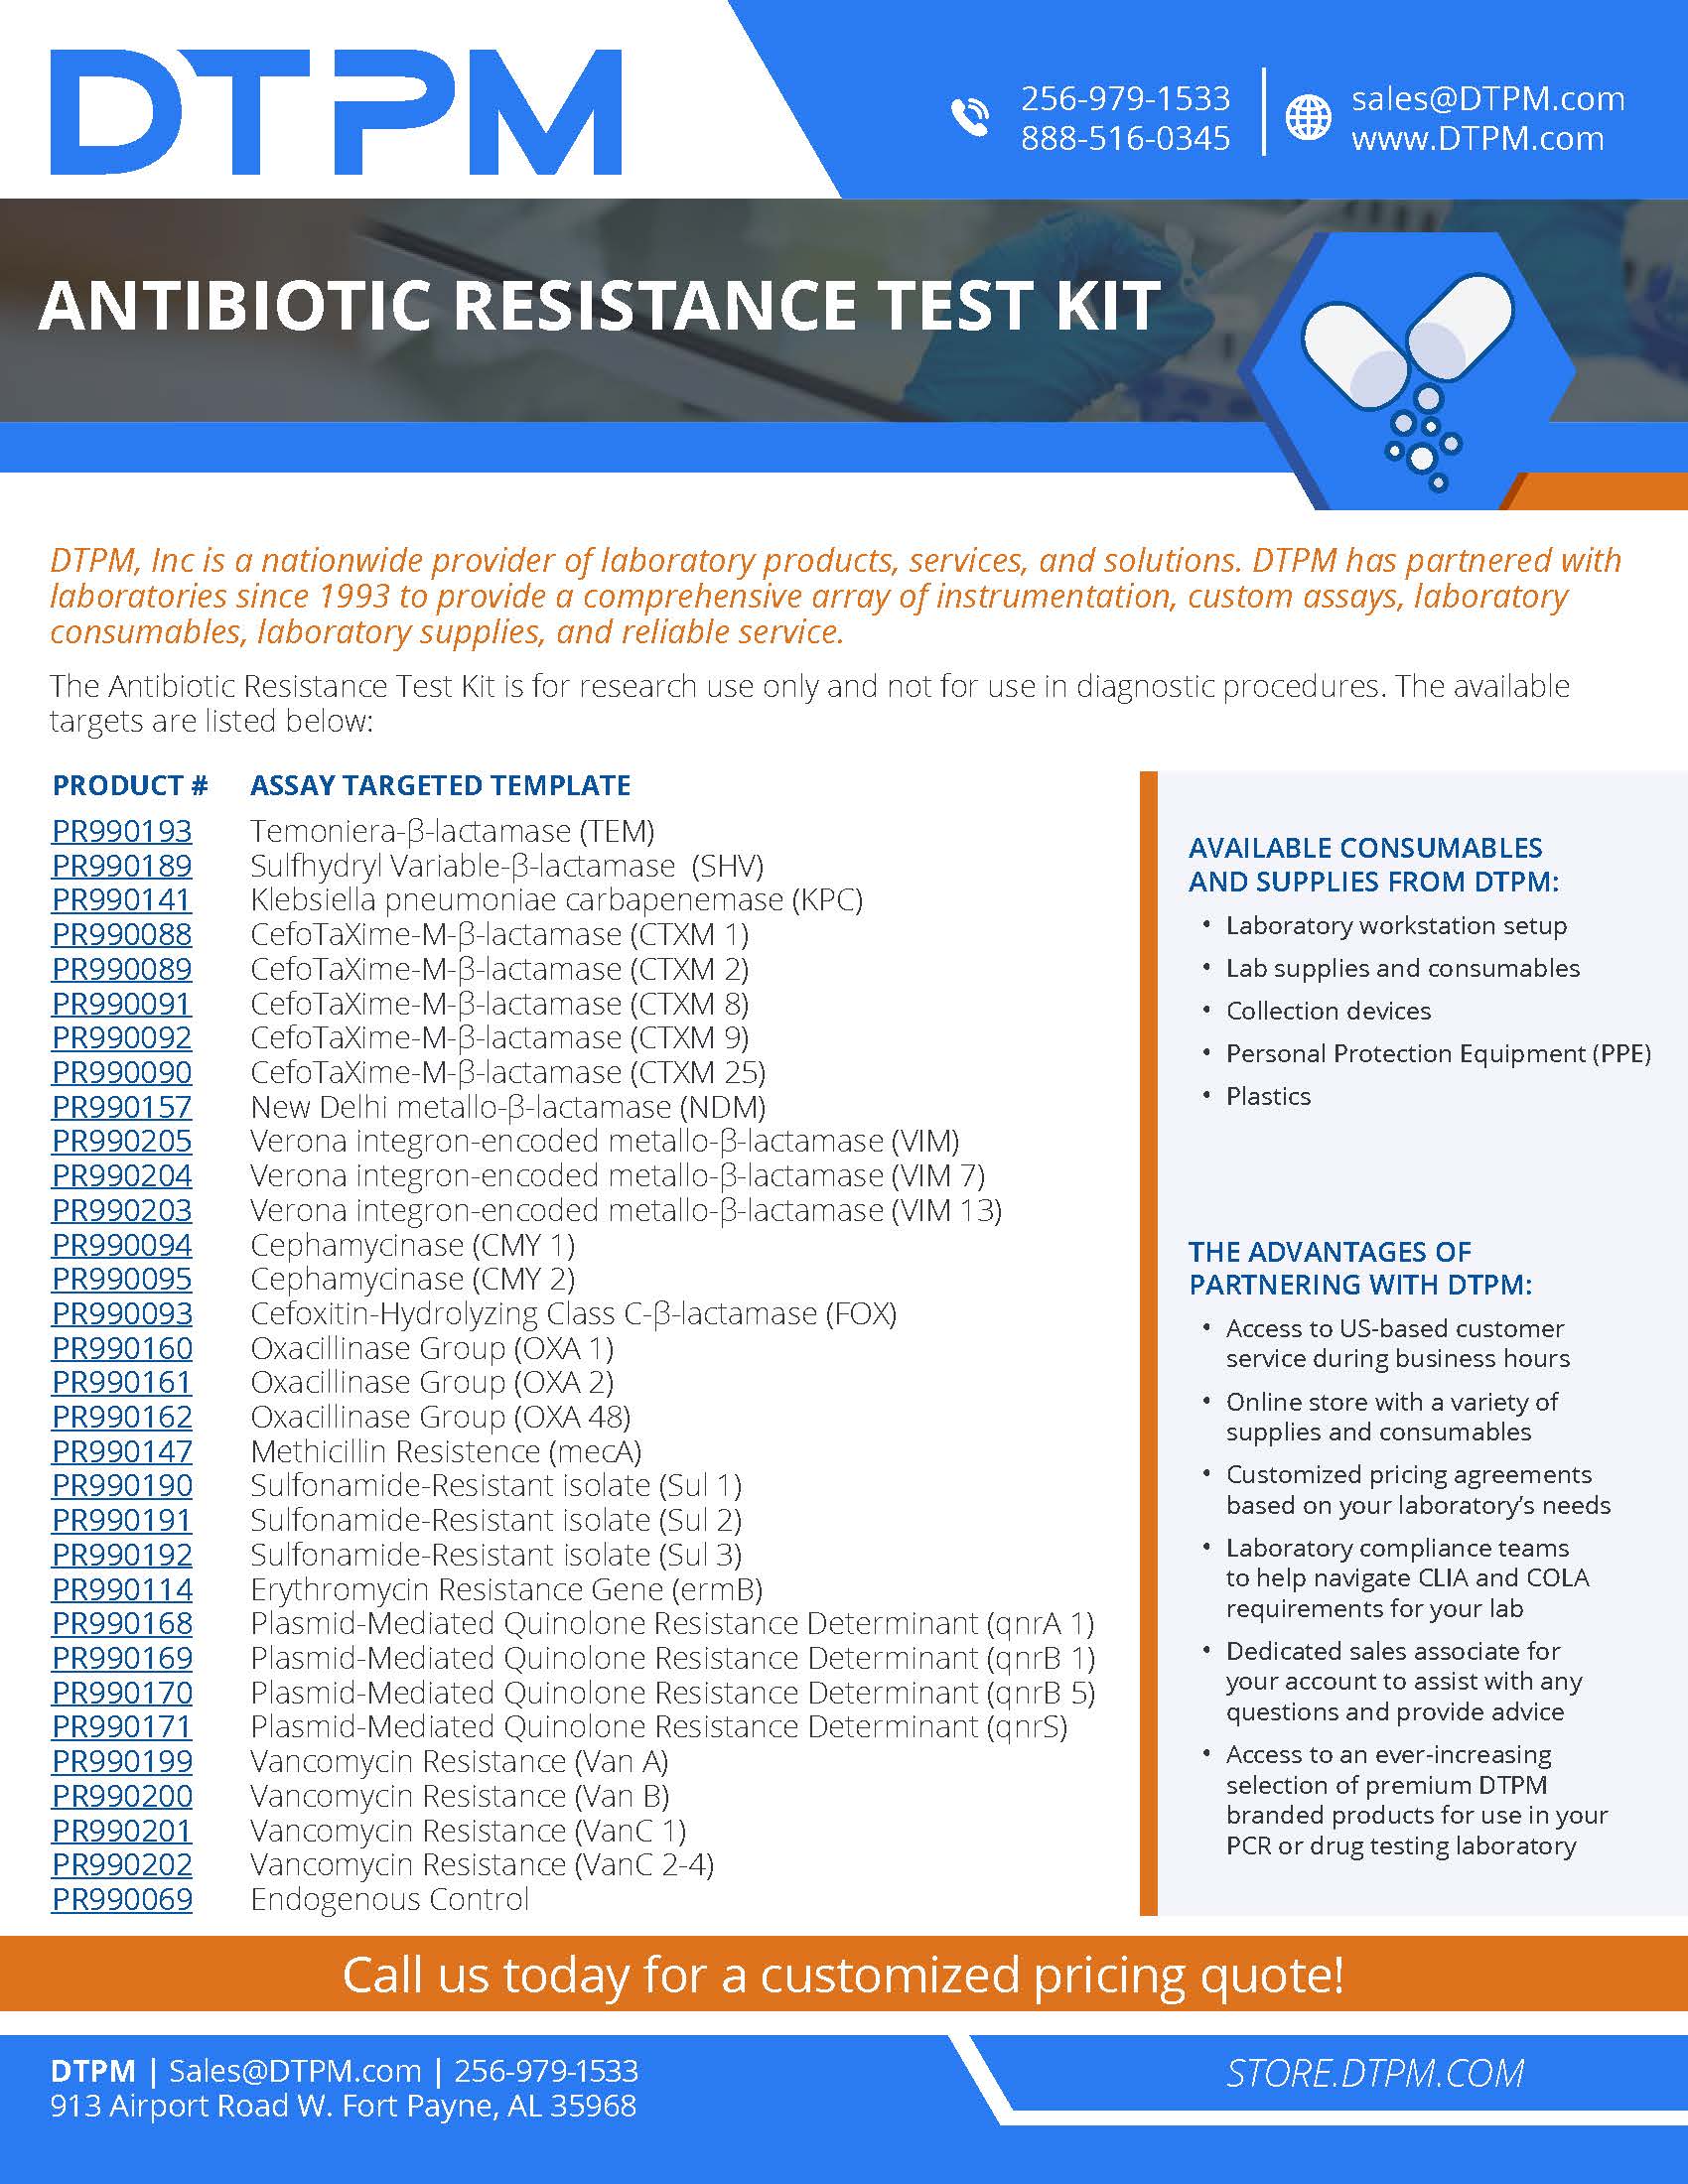 DTPM Antibiotic Resistance Test Kit